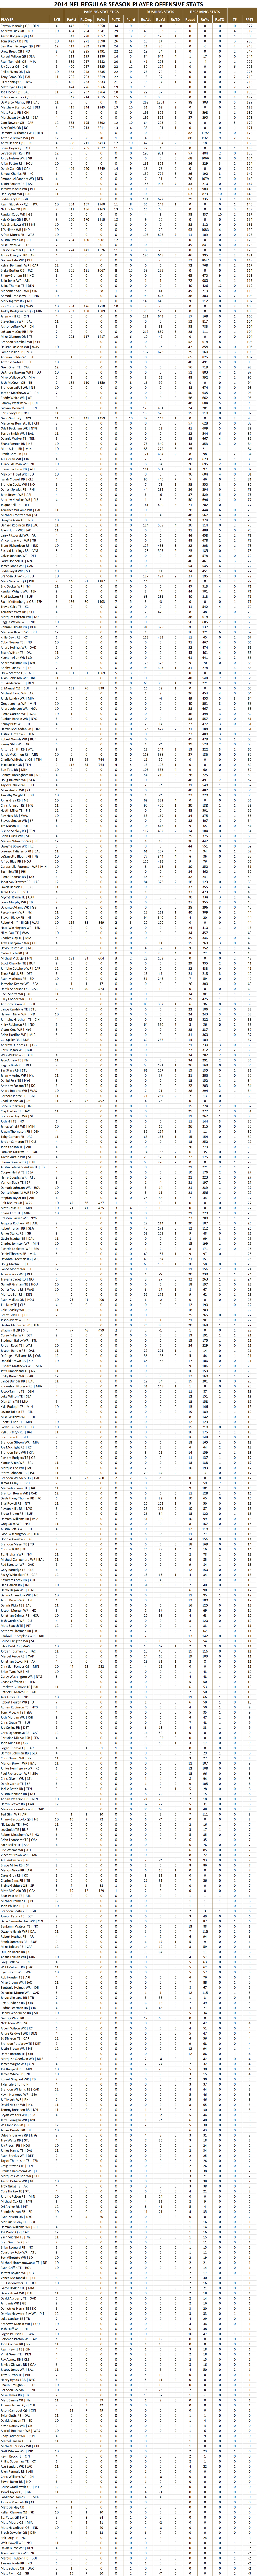 2014 National Football League Pool Season Player Offensive Stats